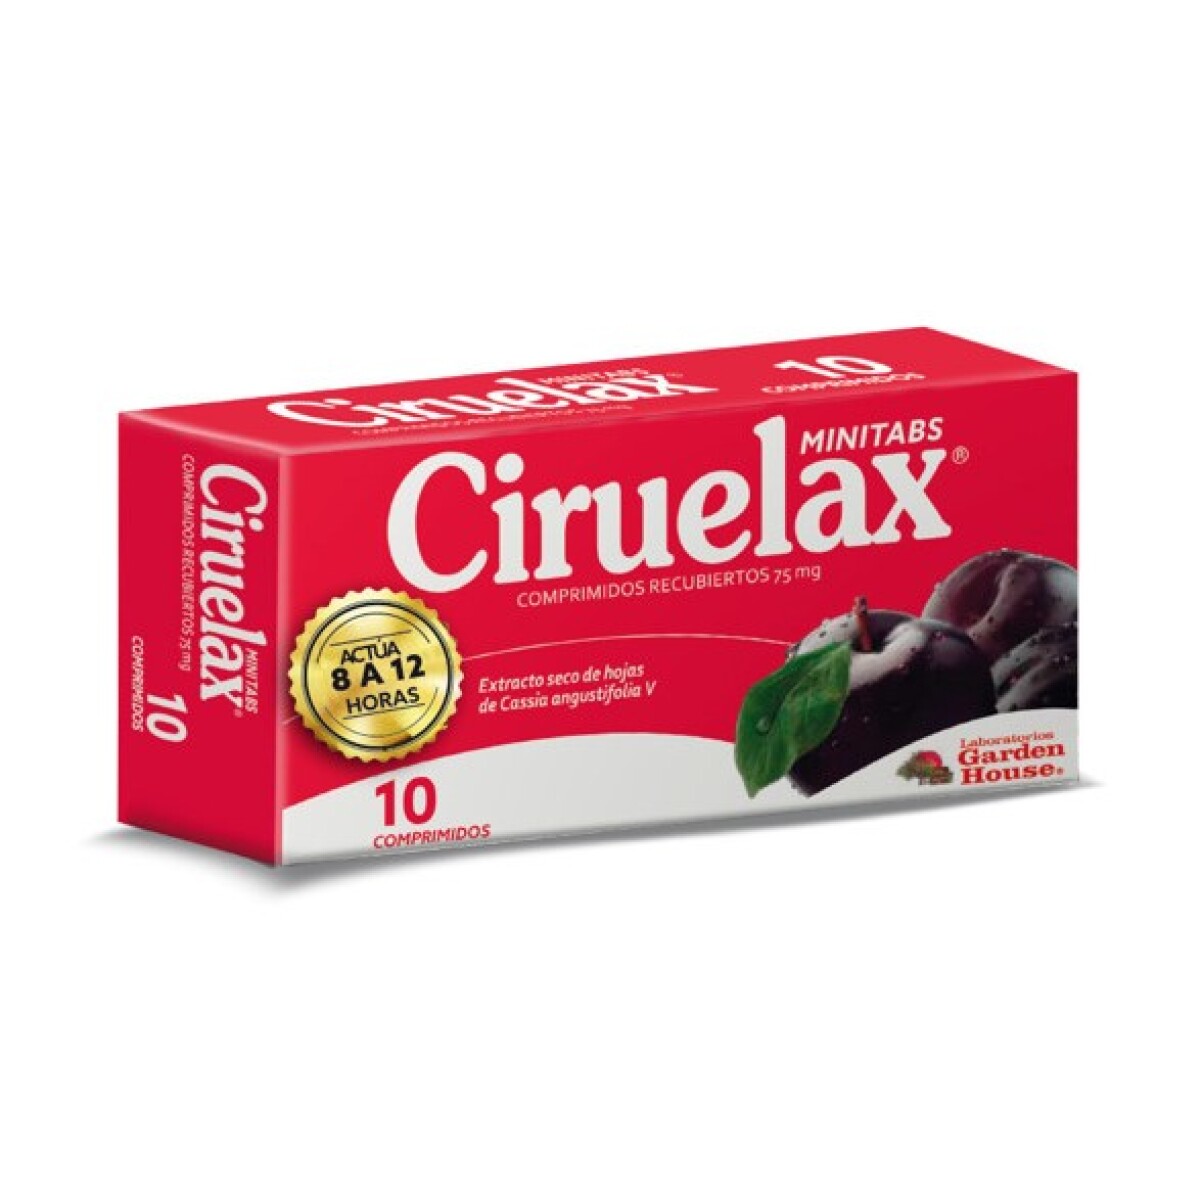 Ciruelax Minitabs x 10 COM 